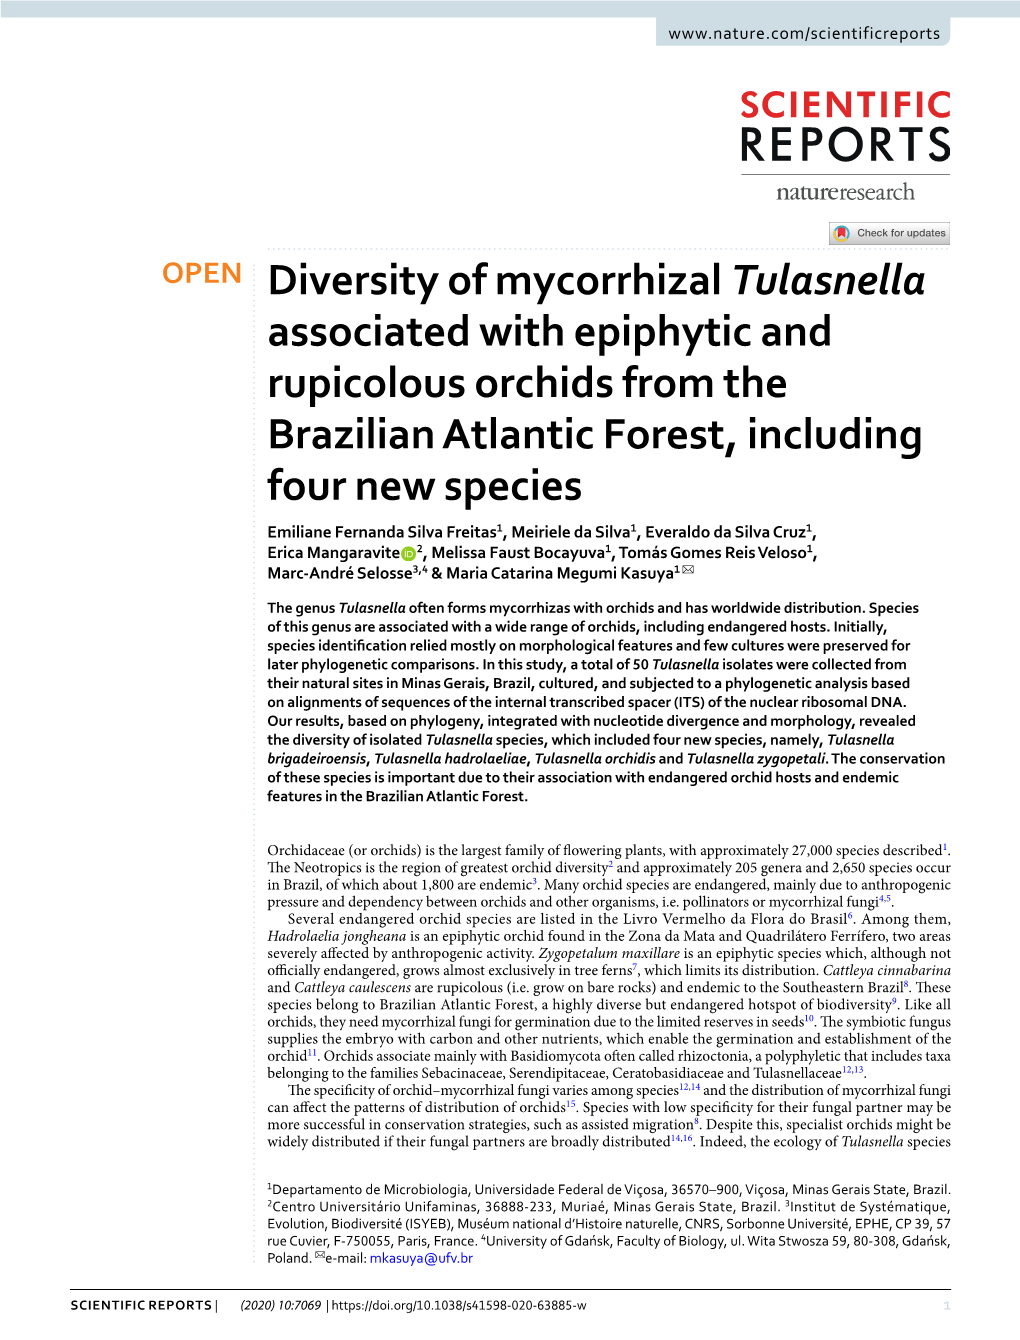 Diversity of Mycorrhizal Tulasnella Associated with Epiphytic And